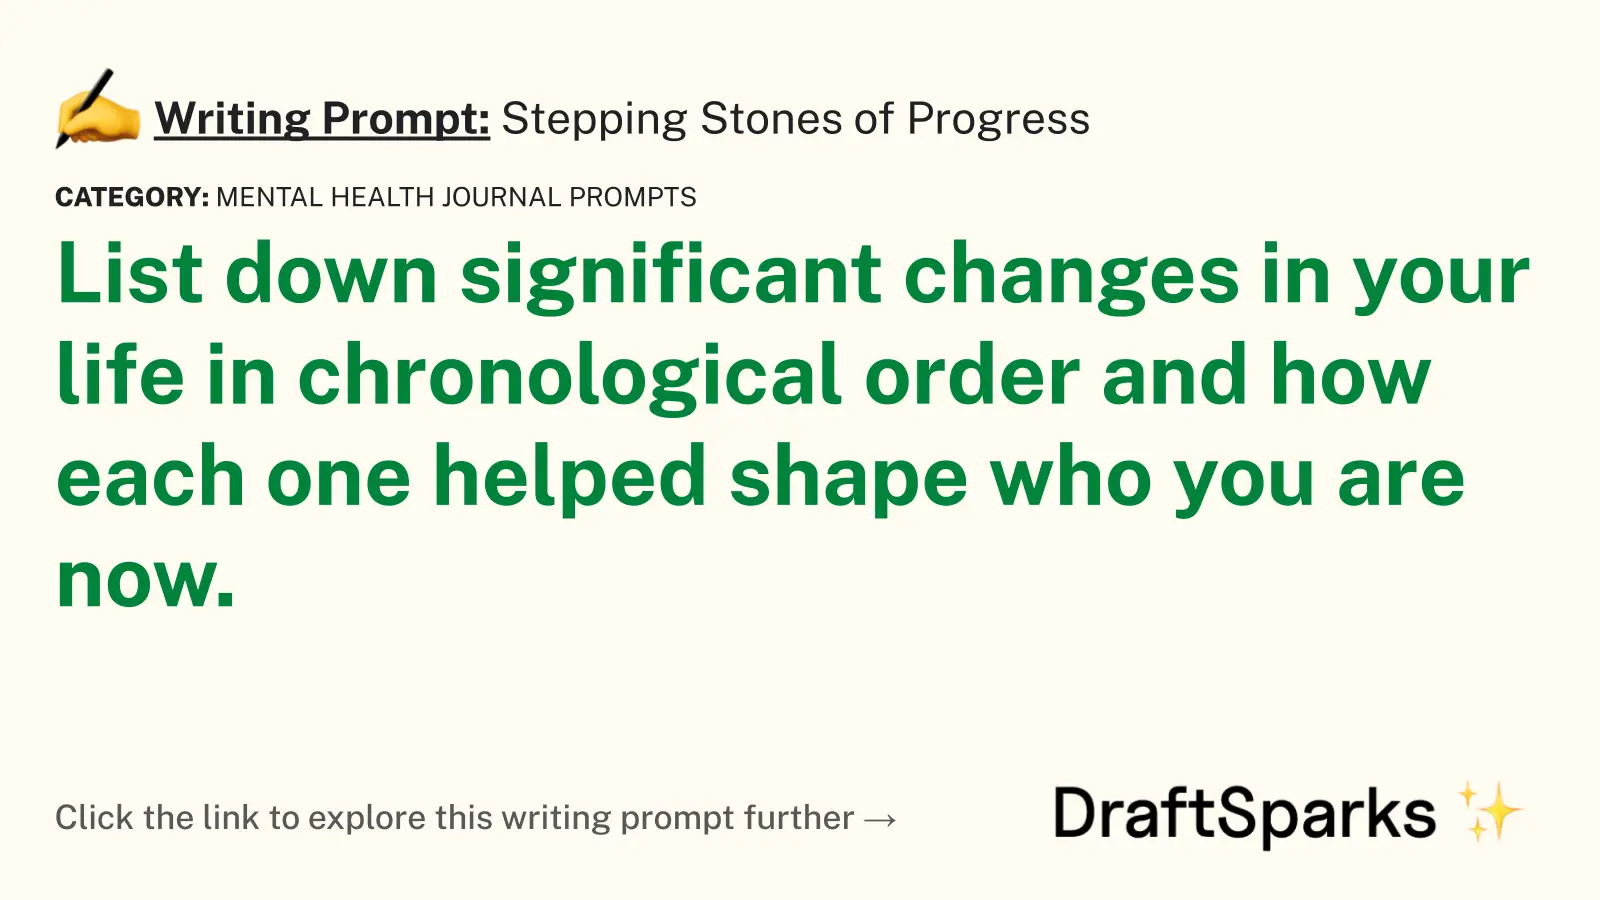 Stepping Stones of Progress